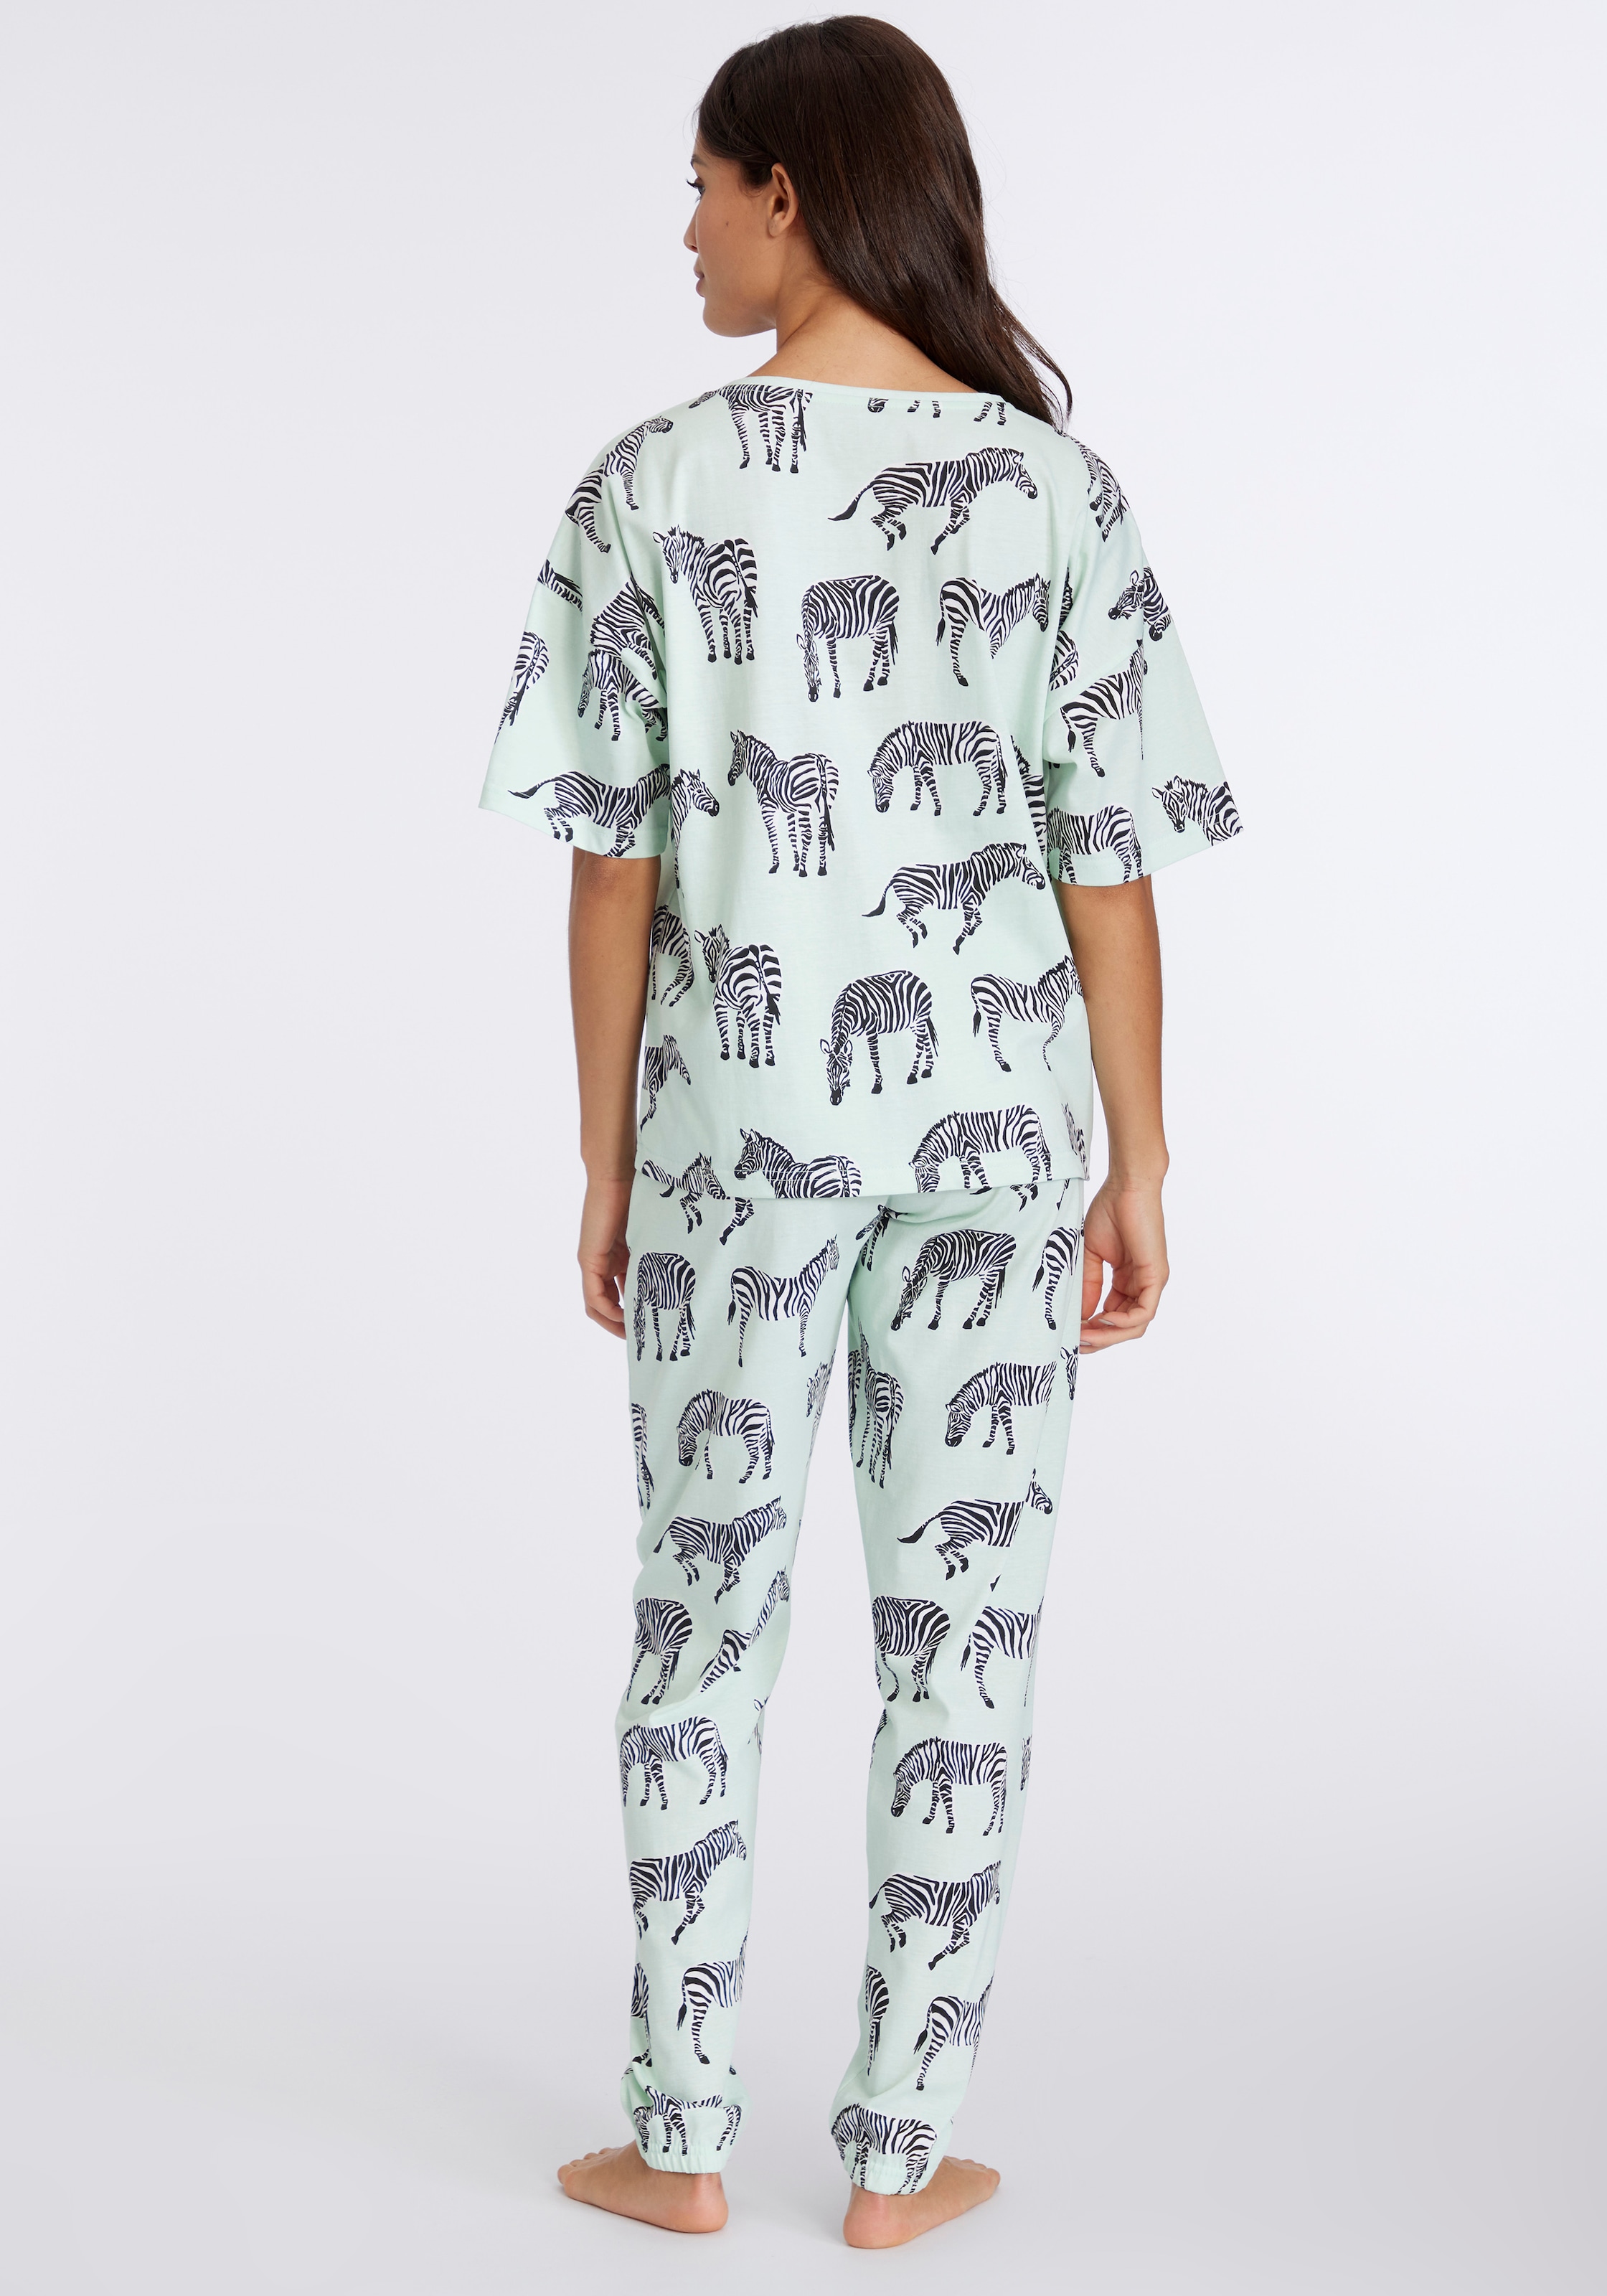 Vivance mt Dreams Animal Pyjama, online kaufen (2 Alloverprint tlg.),